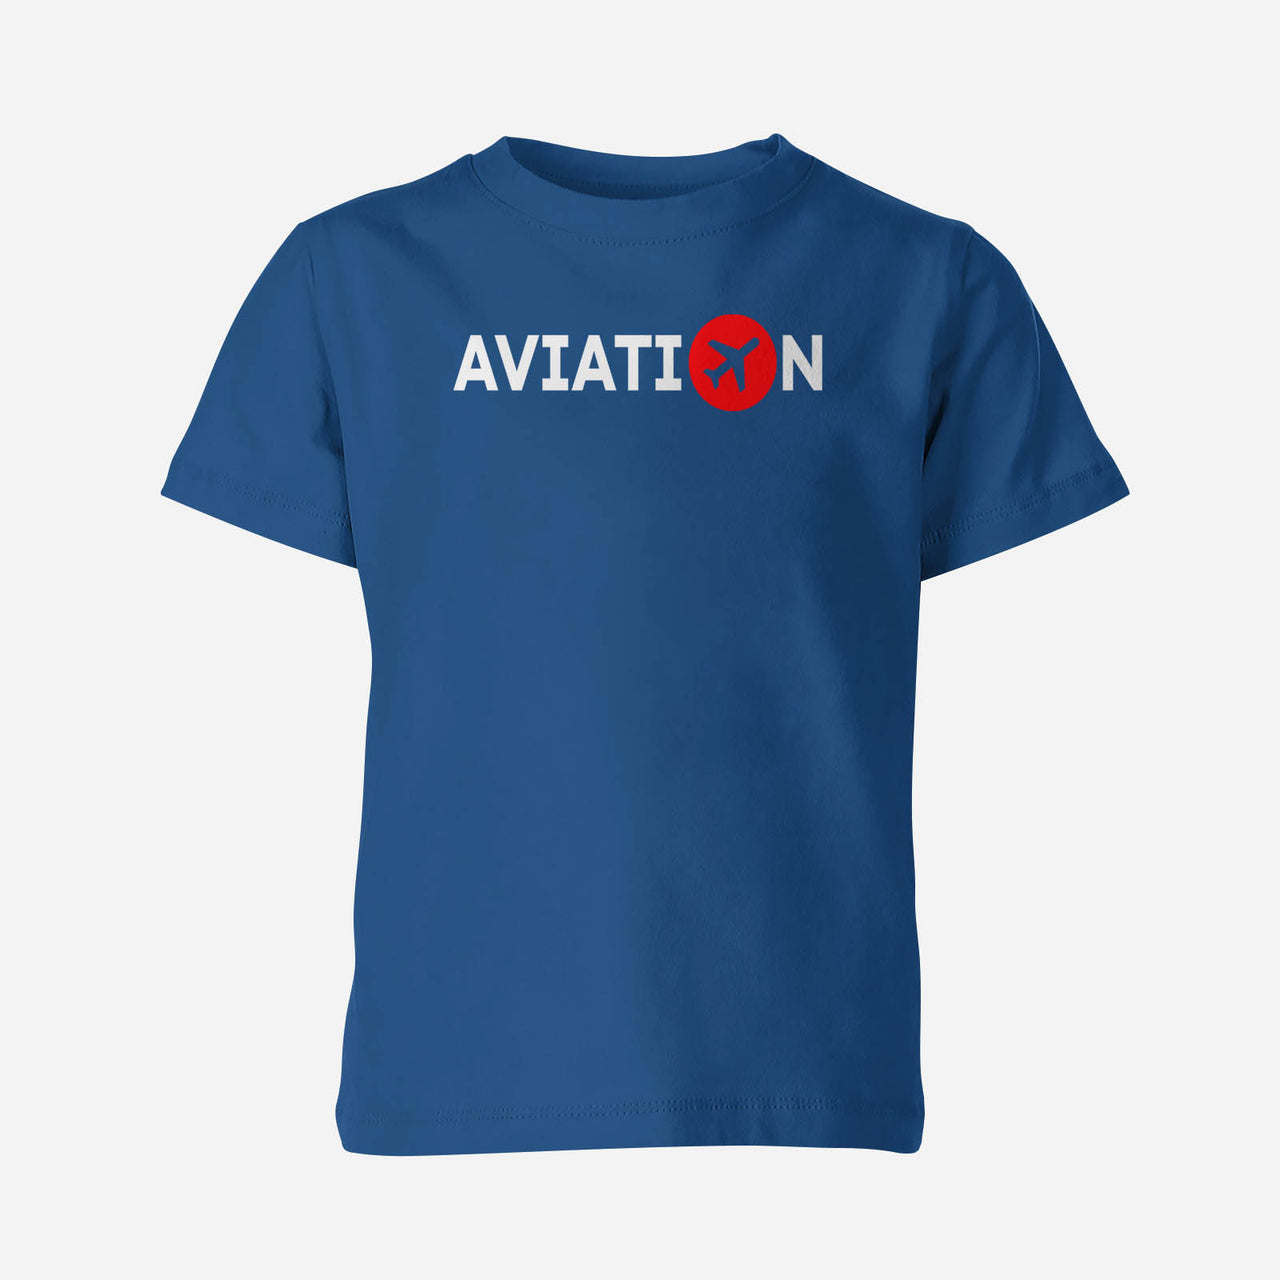 Aviation Designed Children T-Shirts